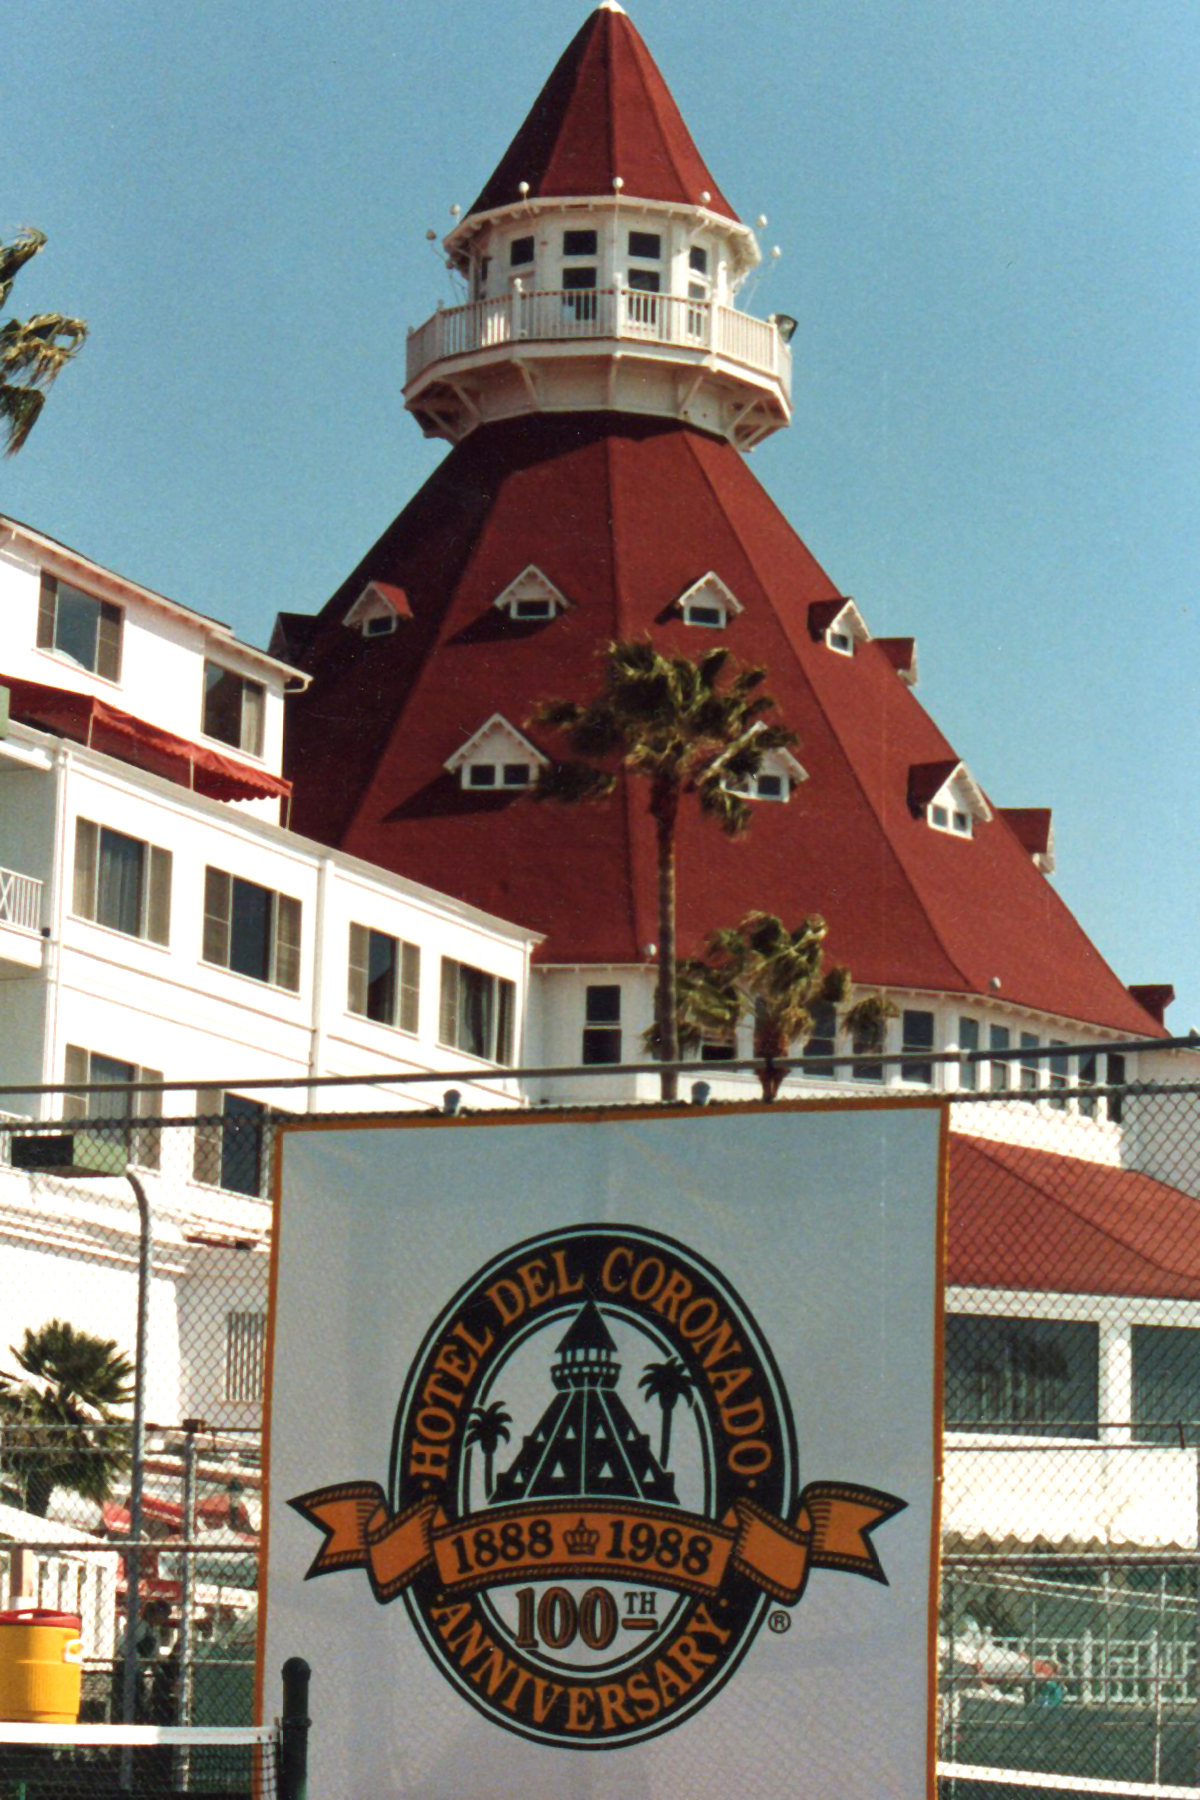 Hotel del Coronado 100th anniversary promotional banner